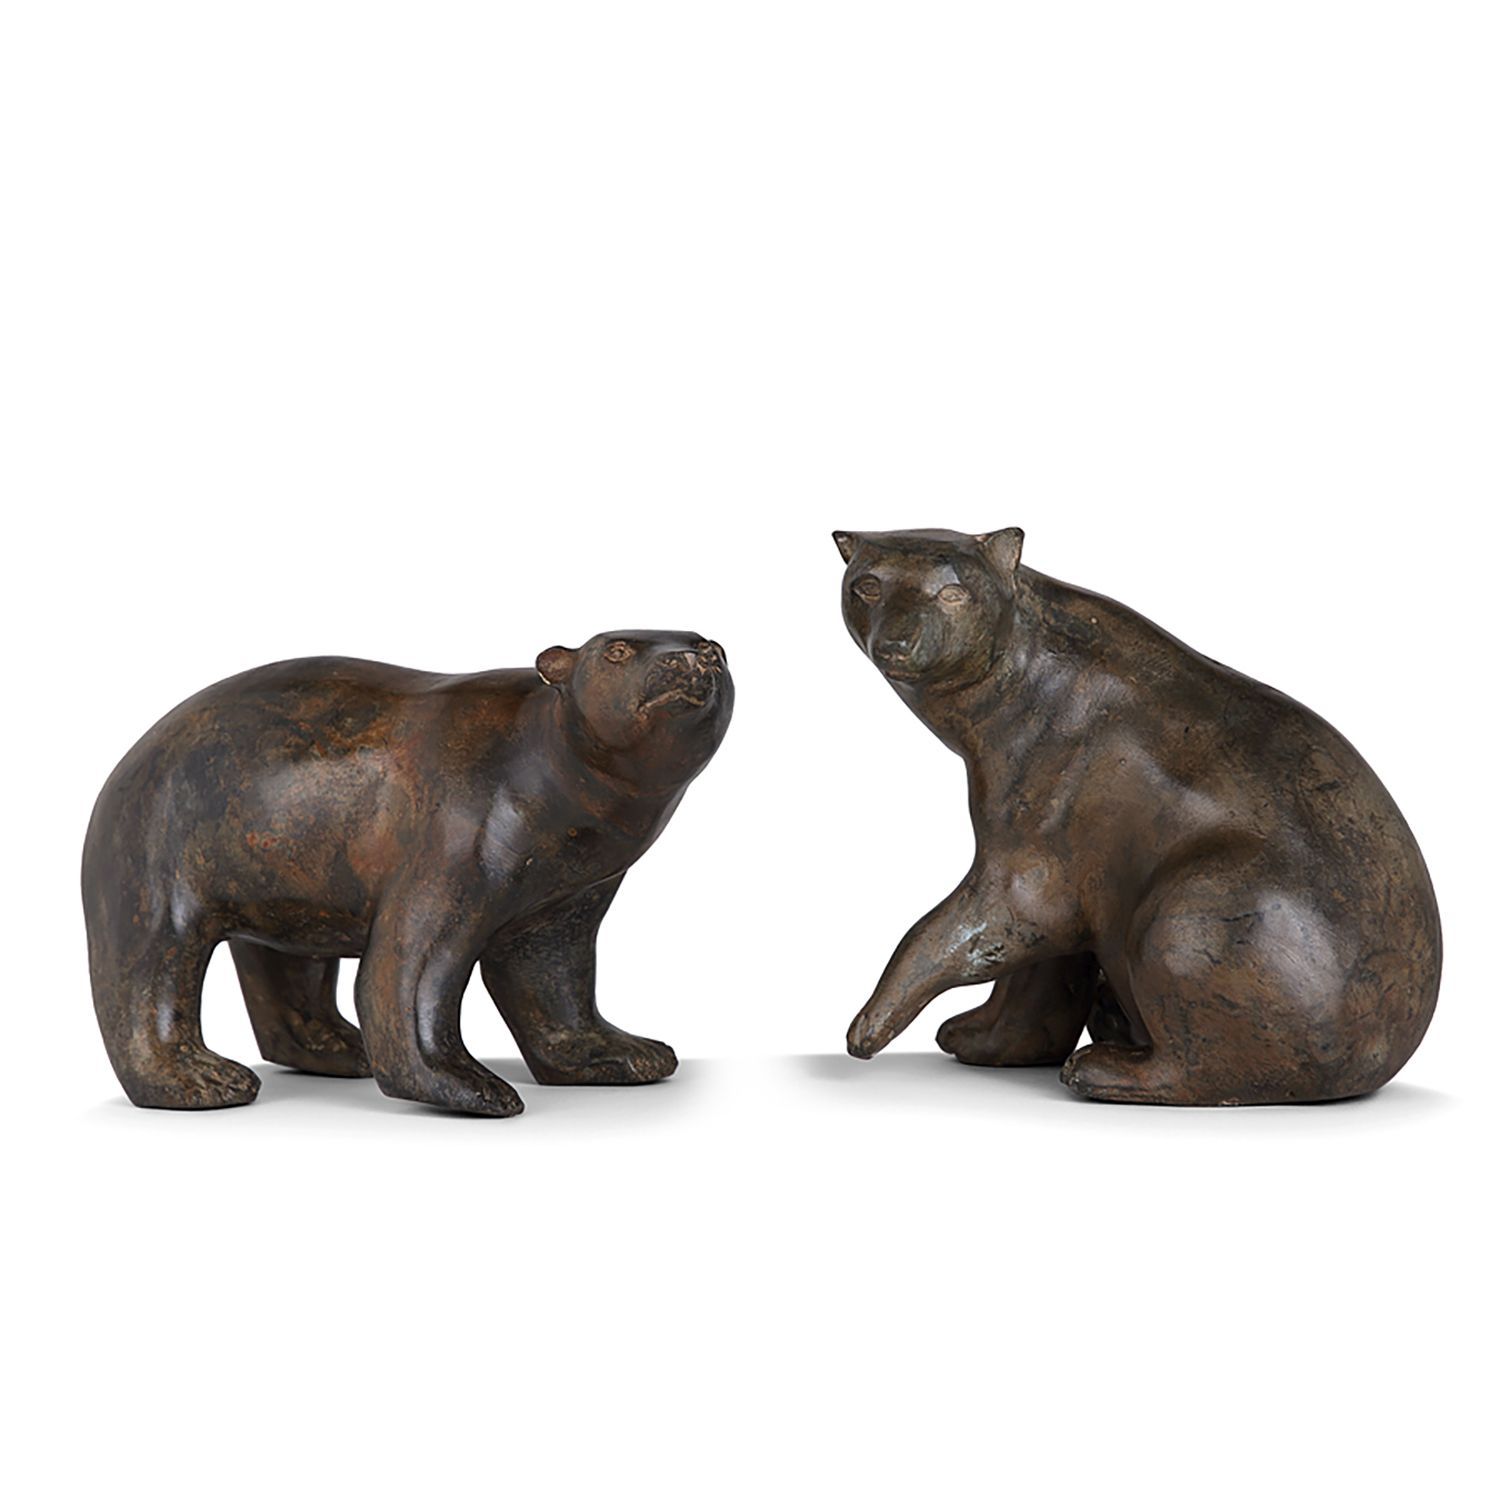 Null 皮埃尔-谢内（20-19世纪）

一对两熊

带有棕色和赭石色铜锈的青铜器

一件有签名并盖有铸造厂标记

带有棕色和赭石色铜锈的青铜器；其中一件有签&hellip;